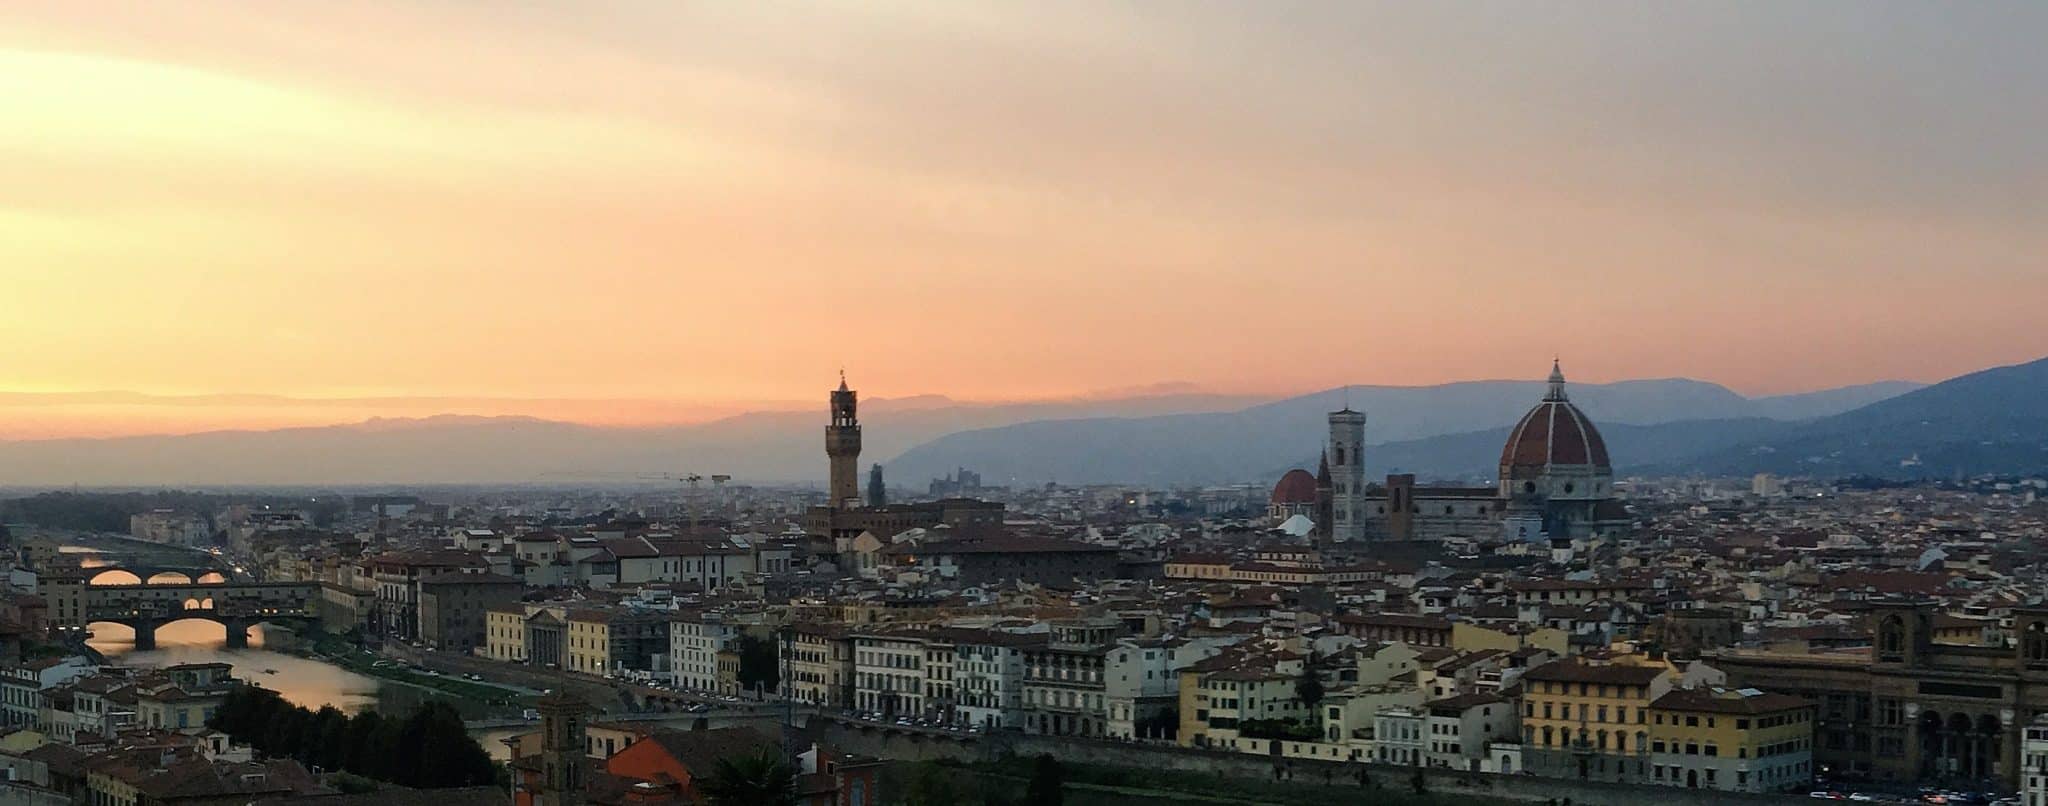 8 things I rediscovered in Florence Piazalle Michelangelo